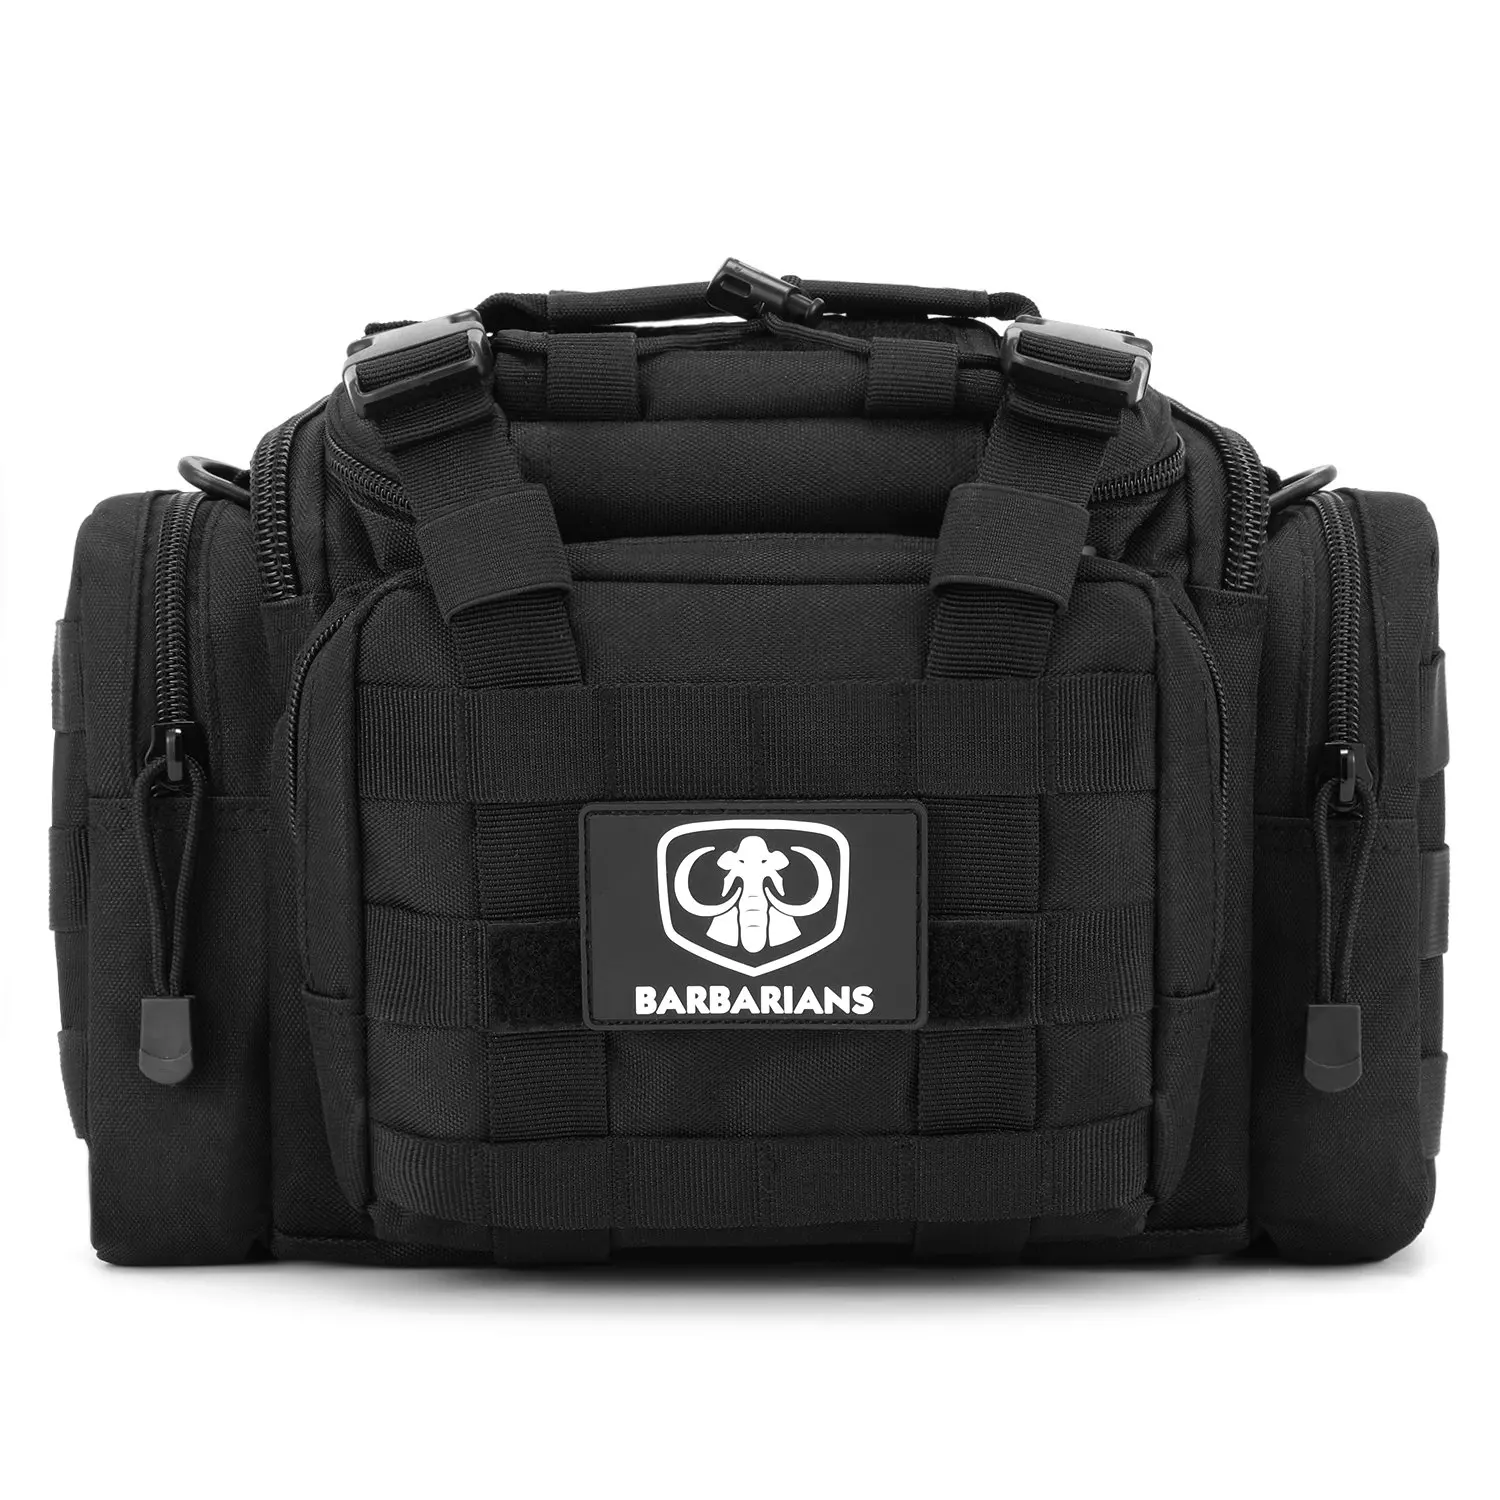 Buy SLR/DSLR Camera Bag Waterproof Shockproof Case, Barbarians Tactical Gear Sling Pack MOLLE ...